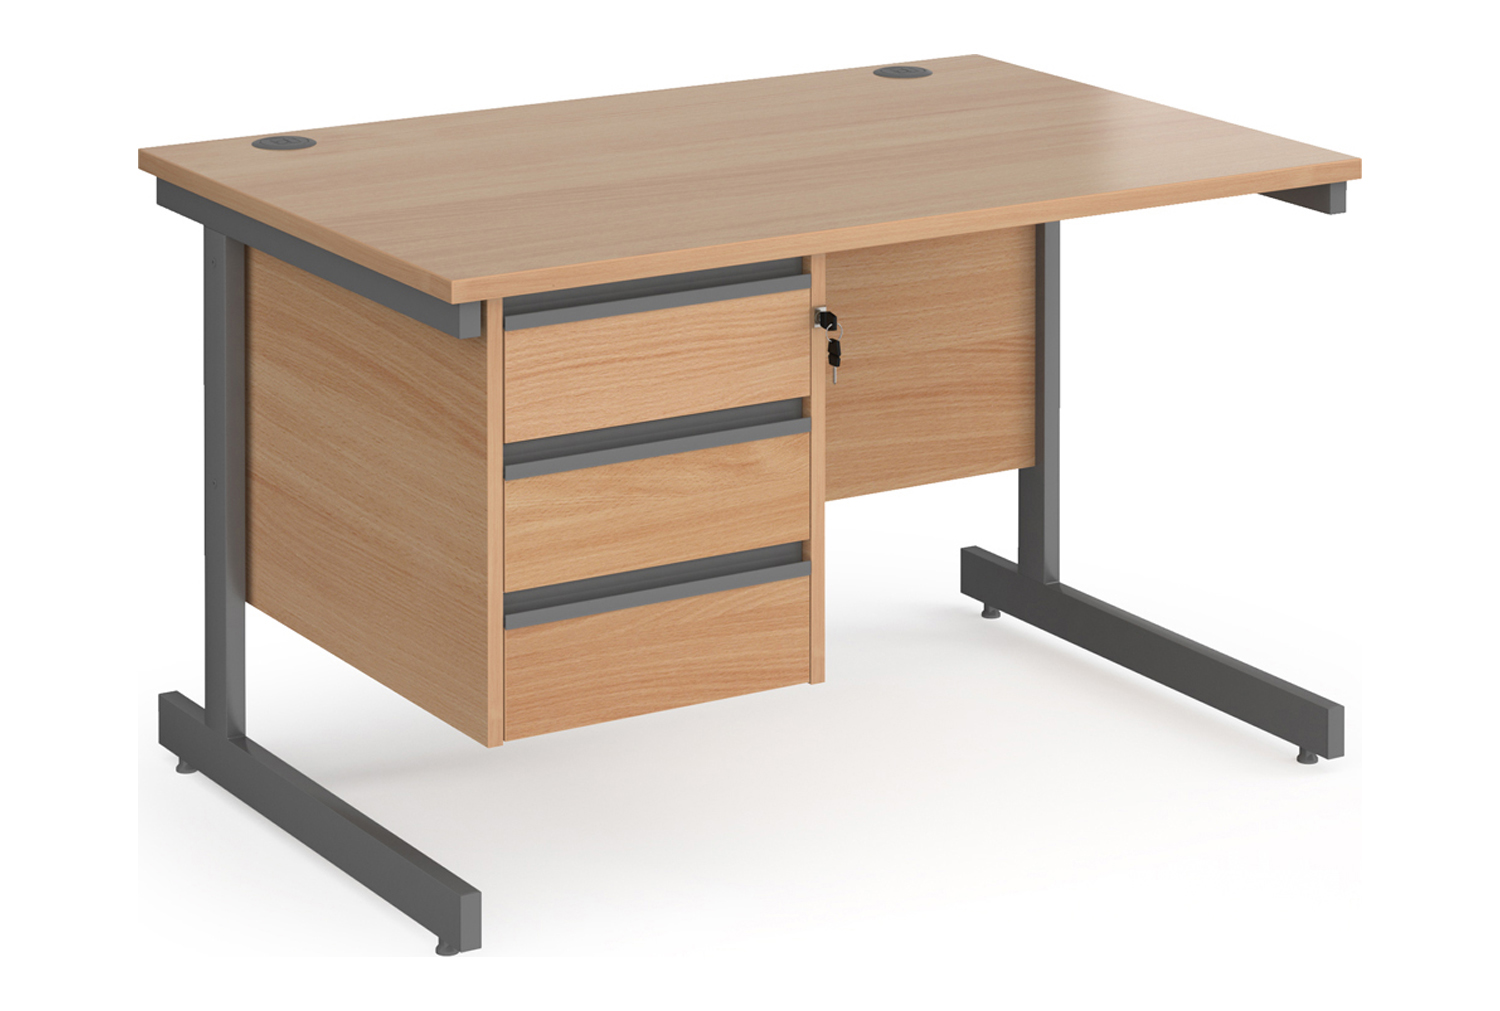 Value Line Classic+ Rectangular C-Leg Office Desk 3 Drawers (Graphite Leg), 120wx80dx73h (cm), Beech, Express Delivery